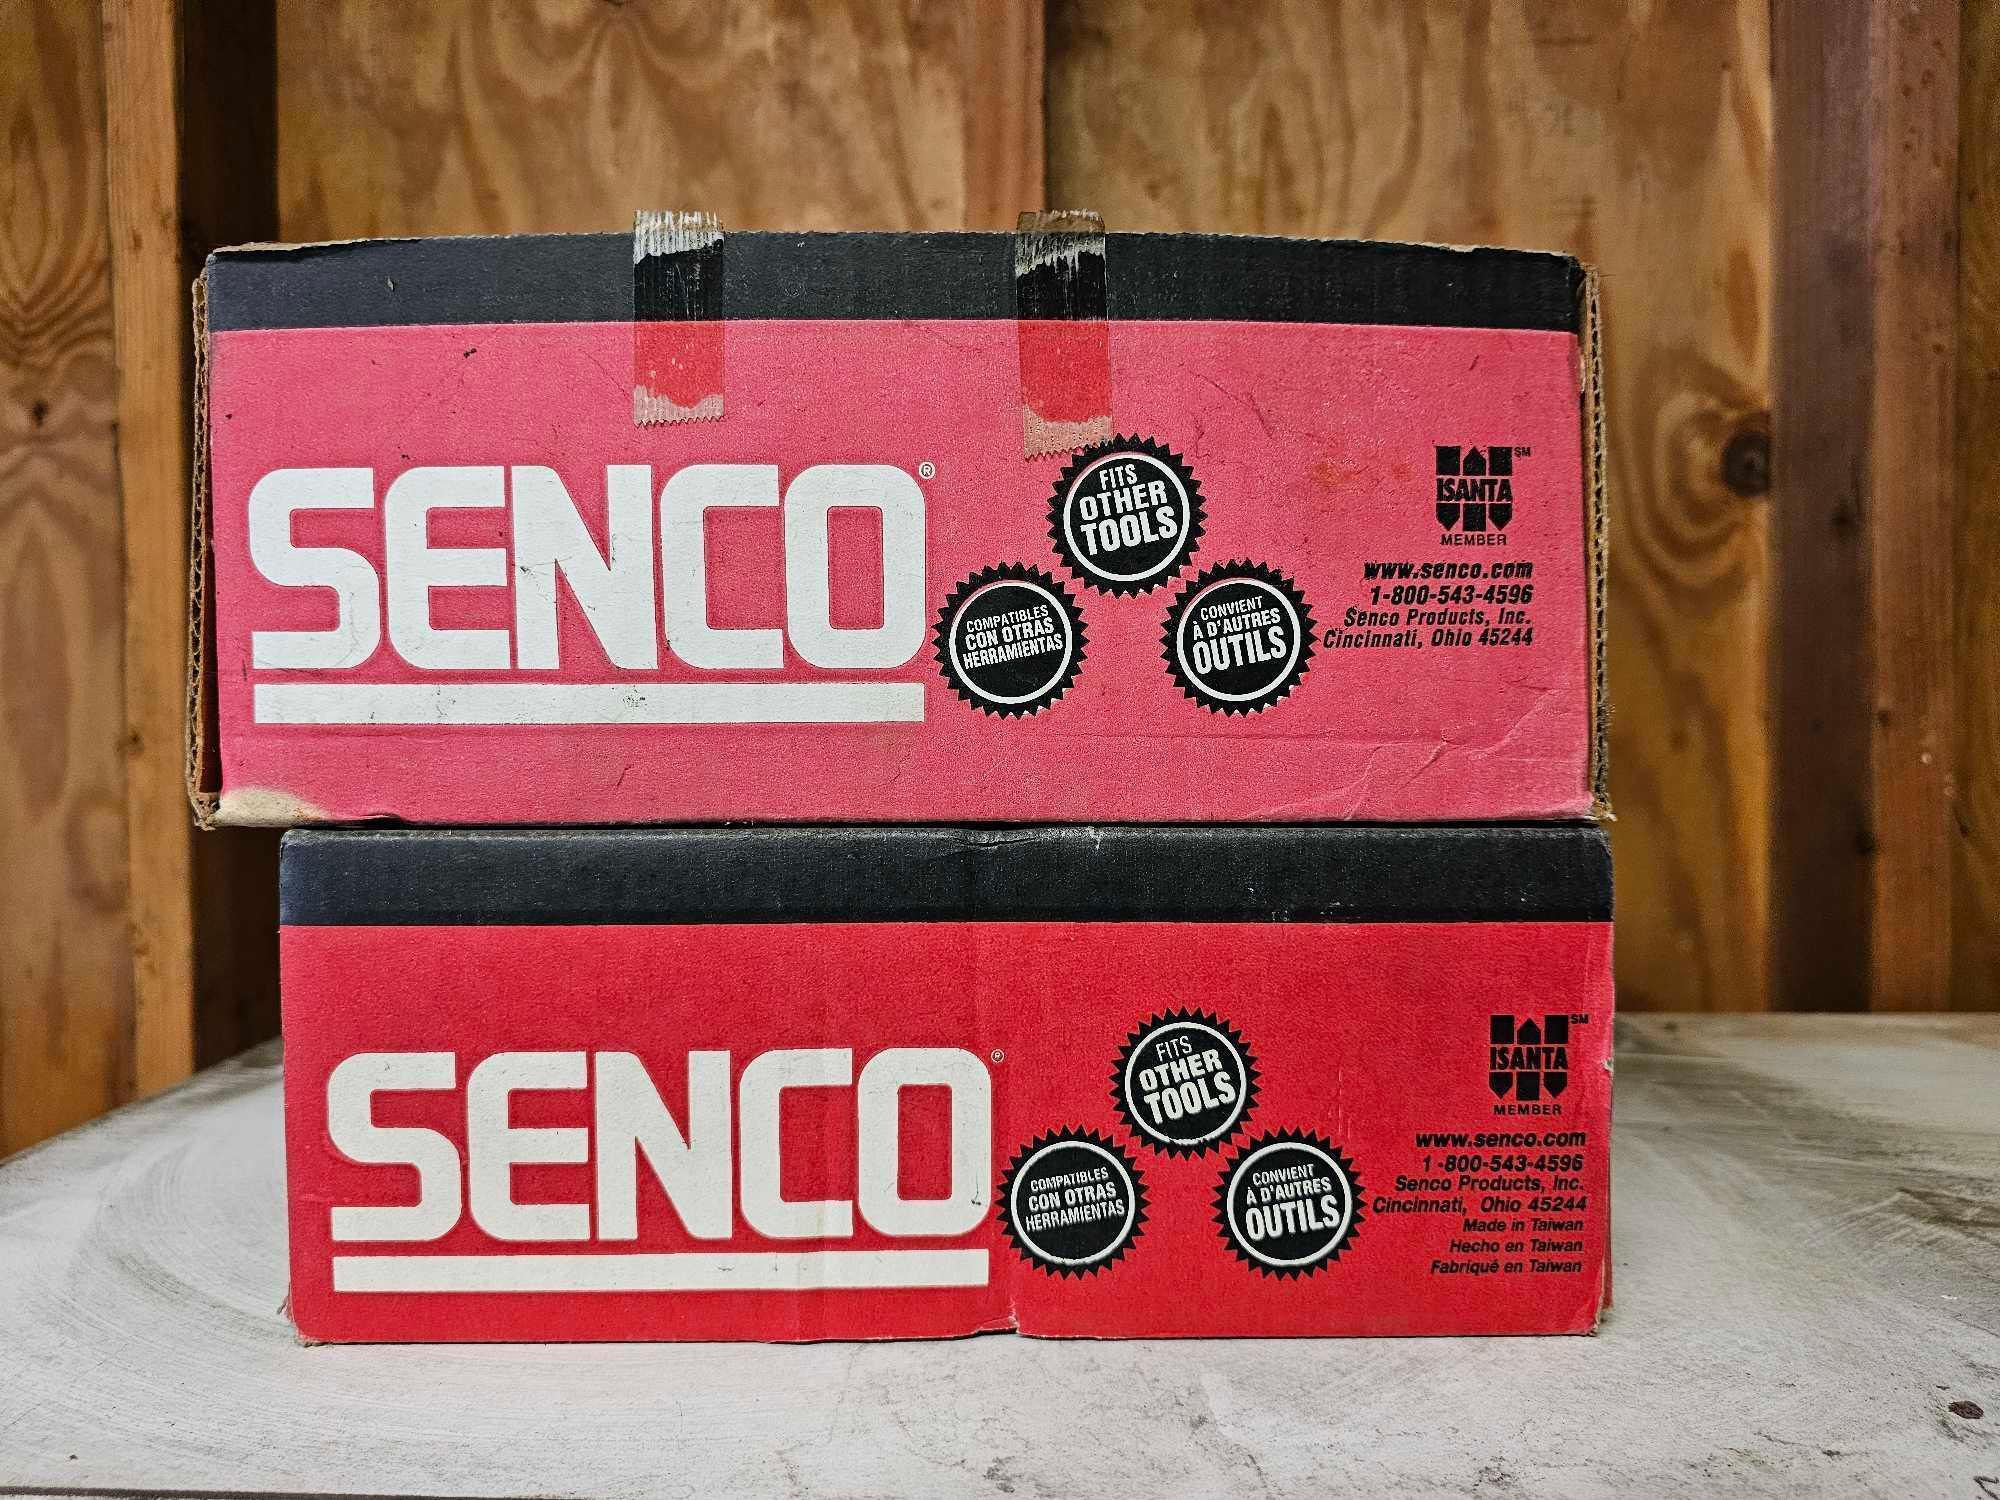 2 BOXES OF SENCO NAILS